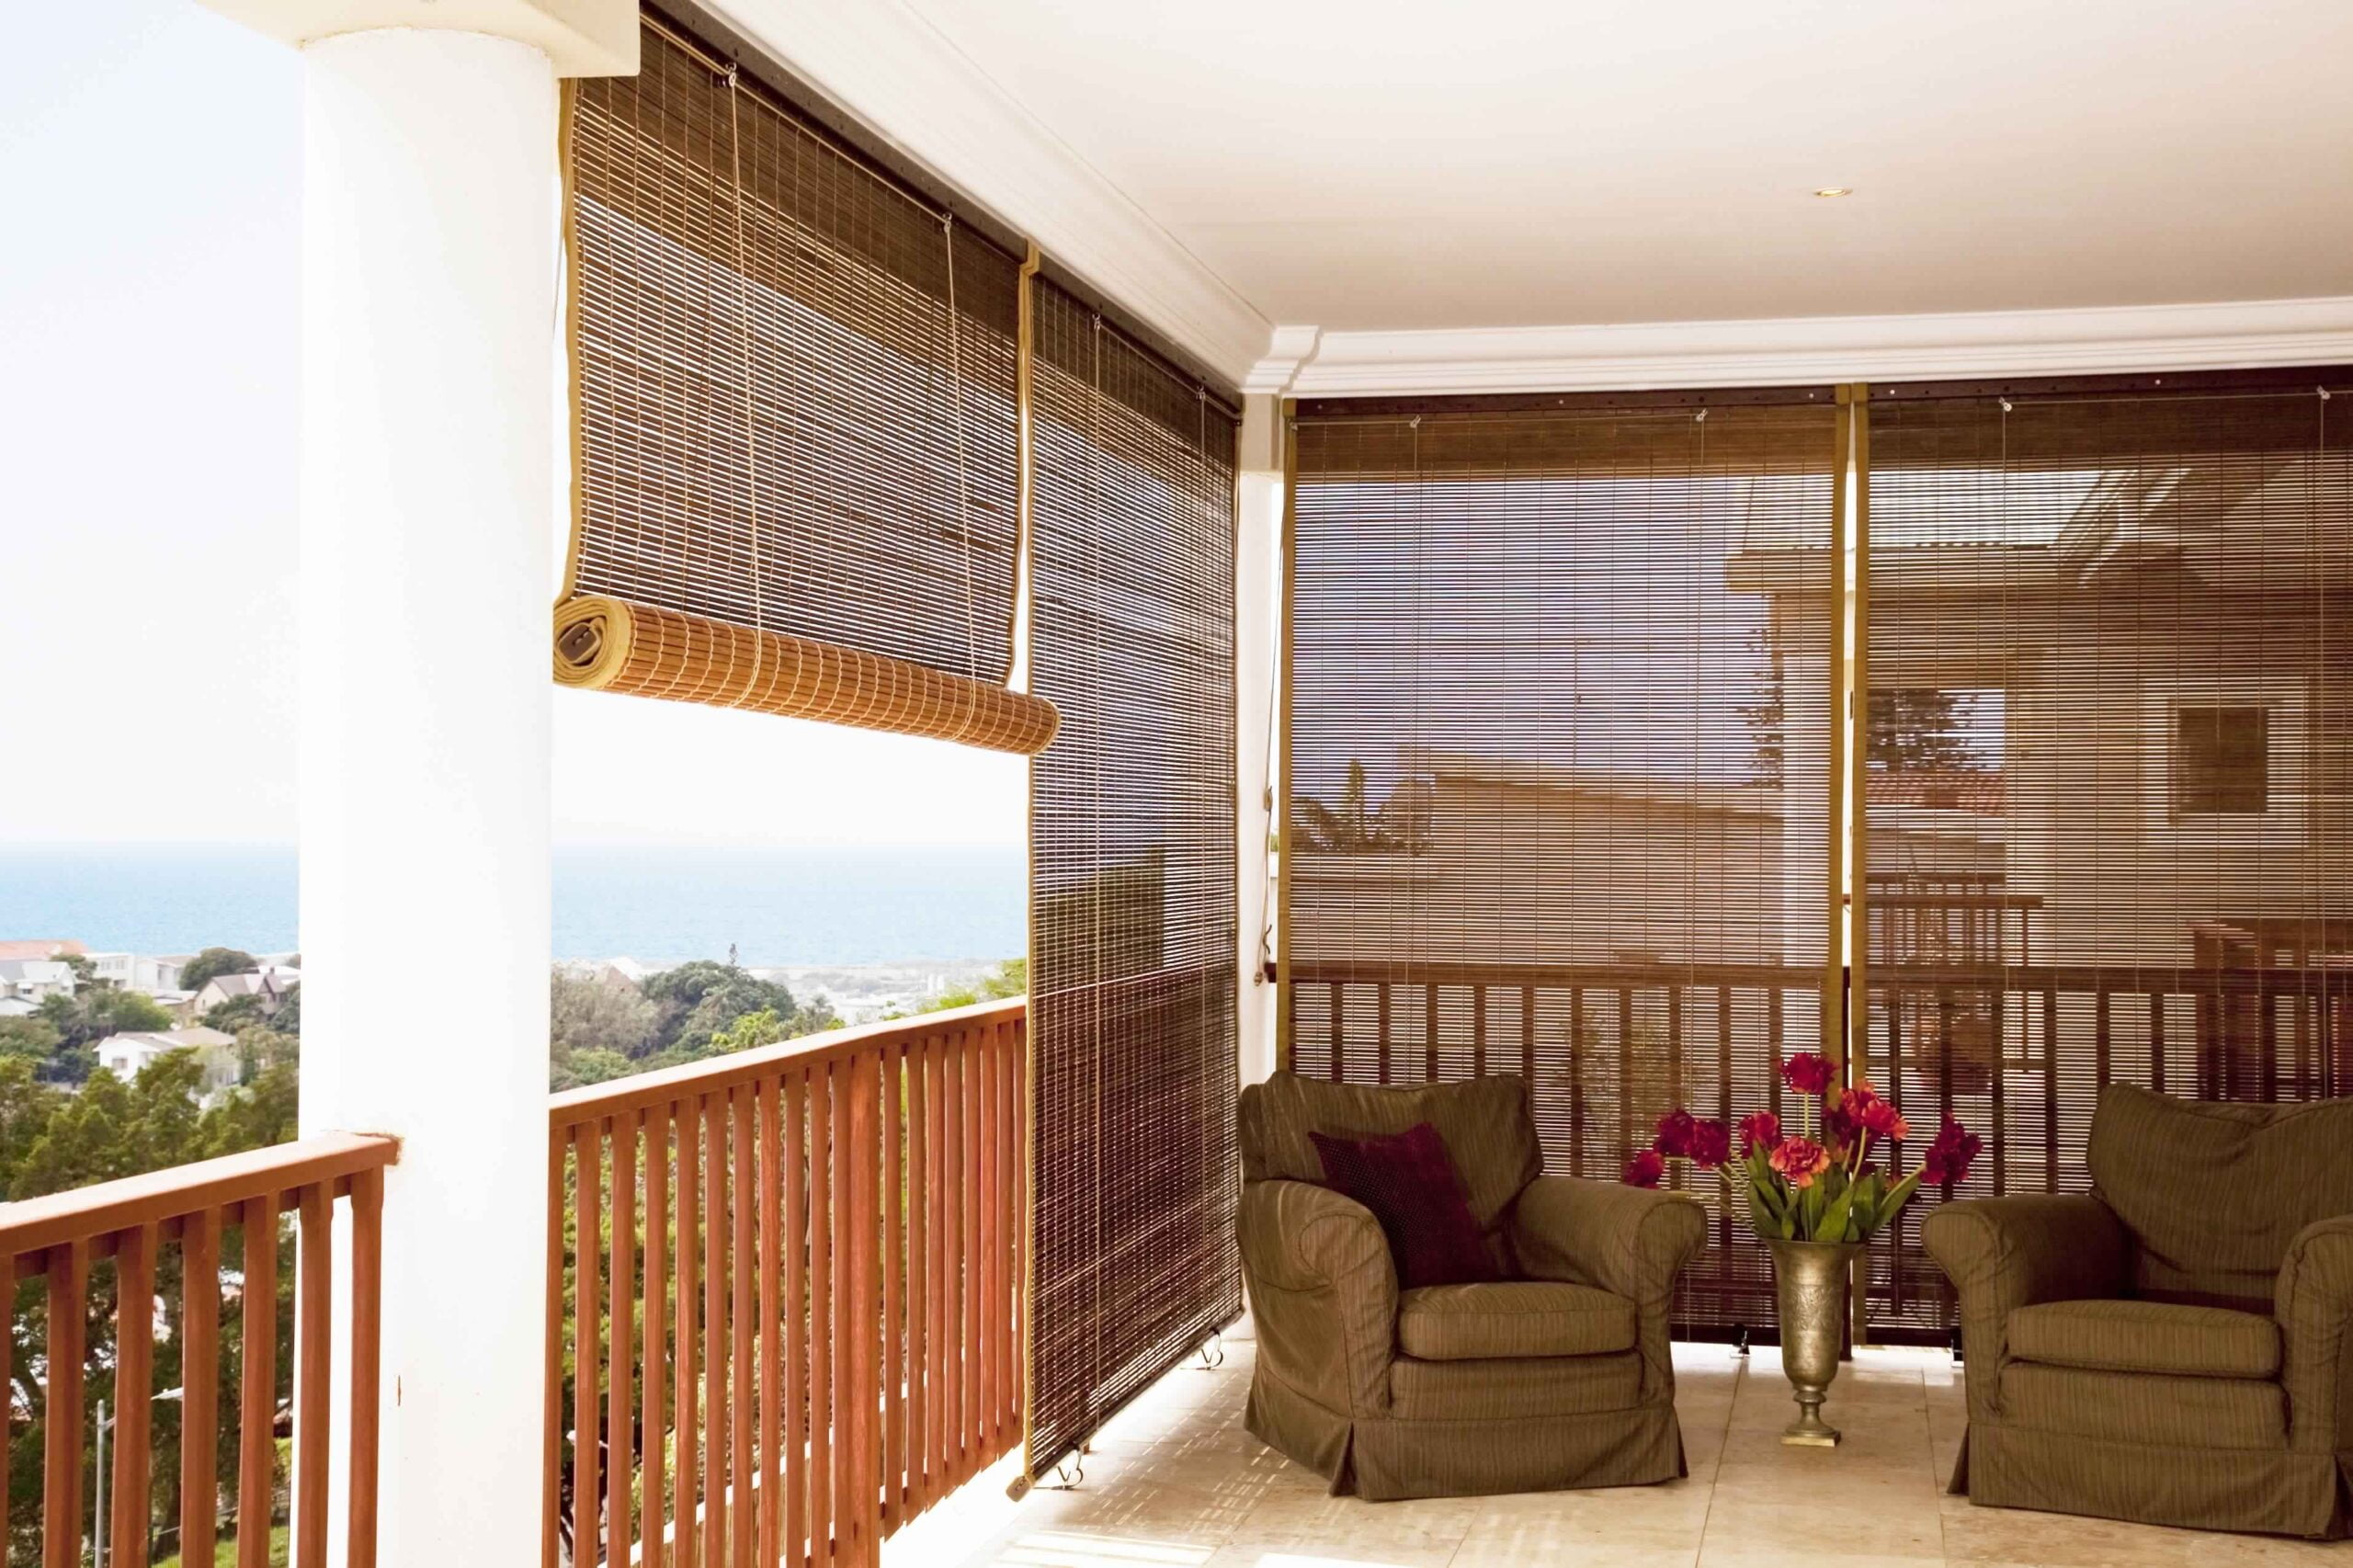 Asian outdoor bamboo blinds